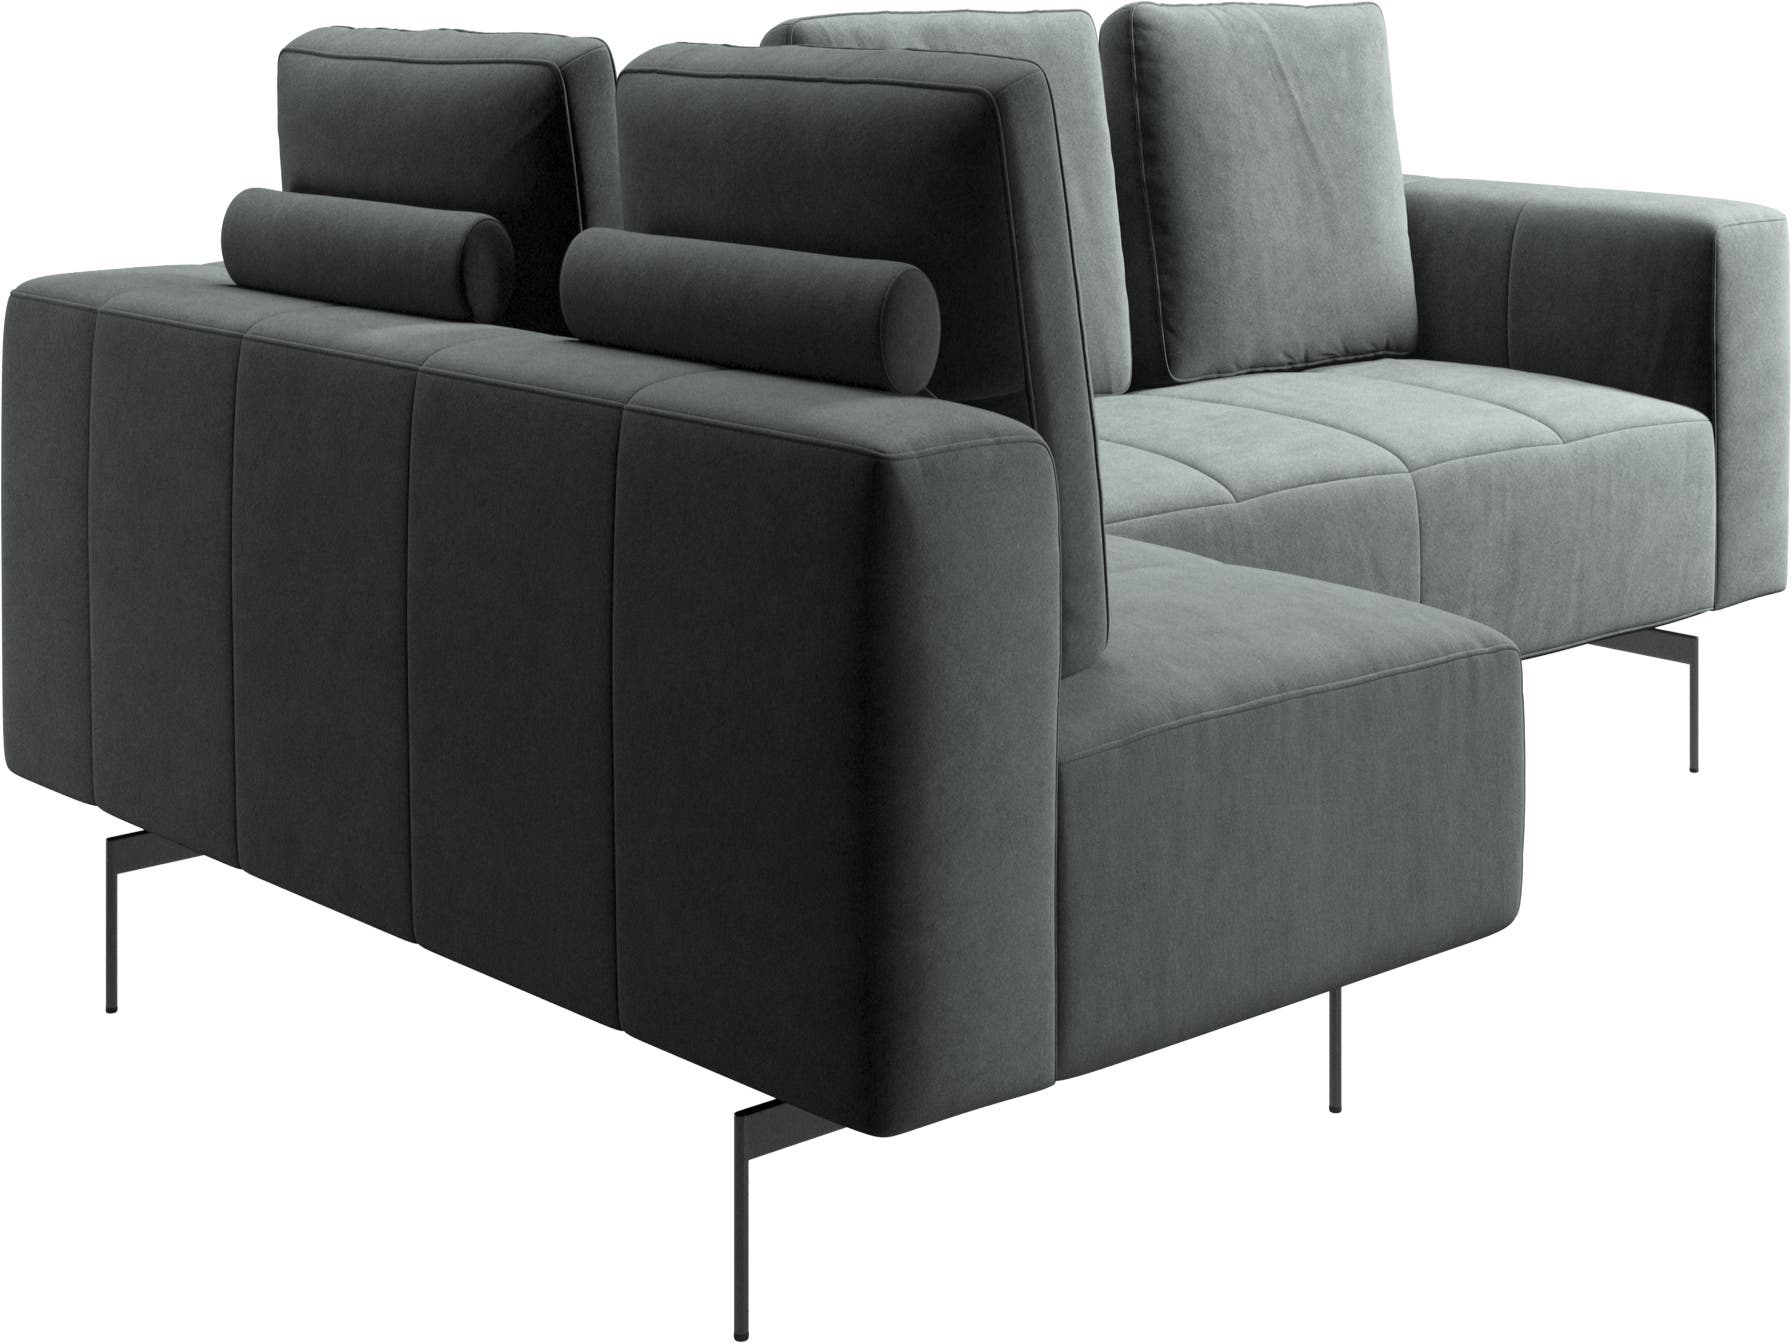 Amsterdam corner sofa with lounging unit | BoConcept